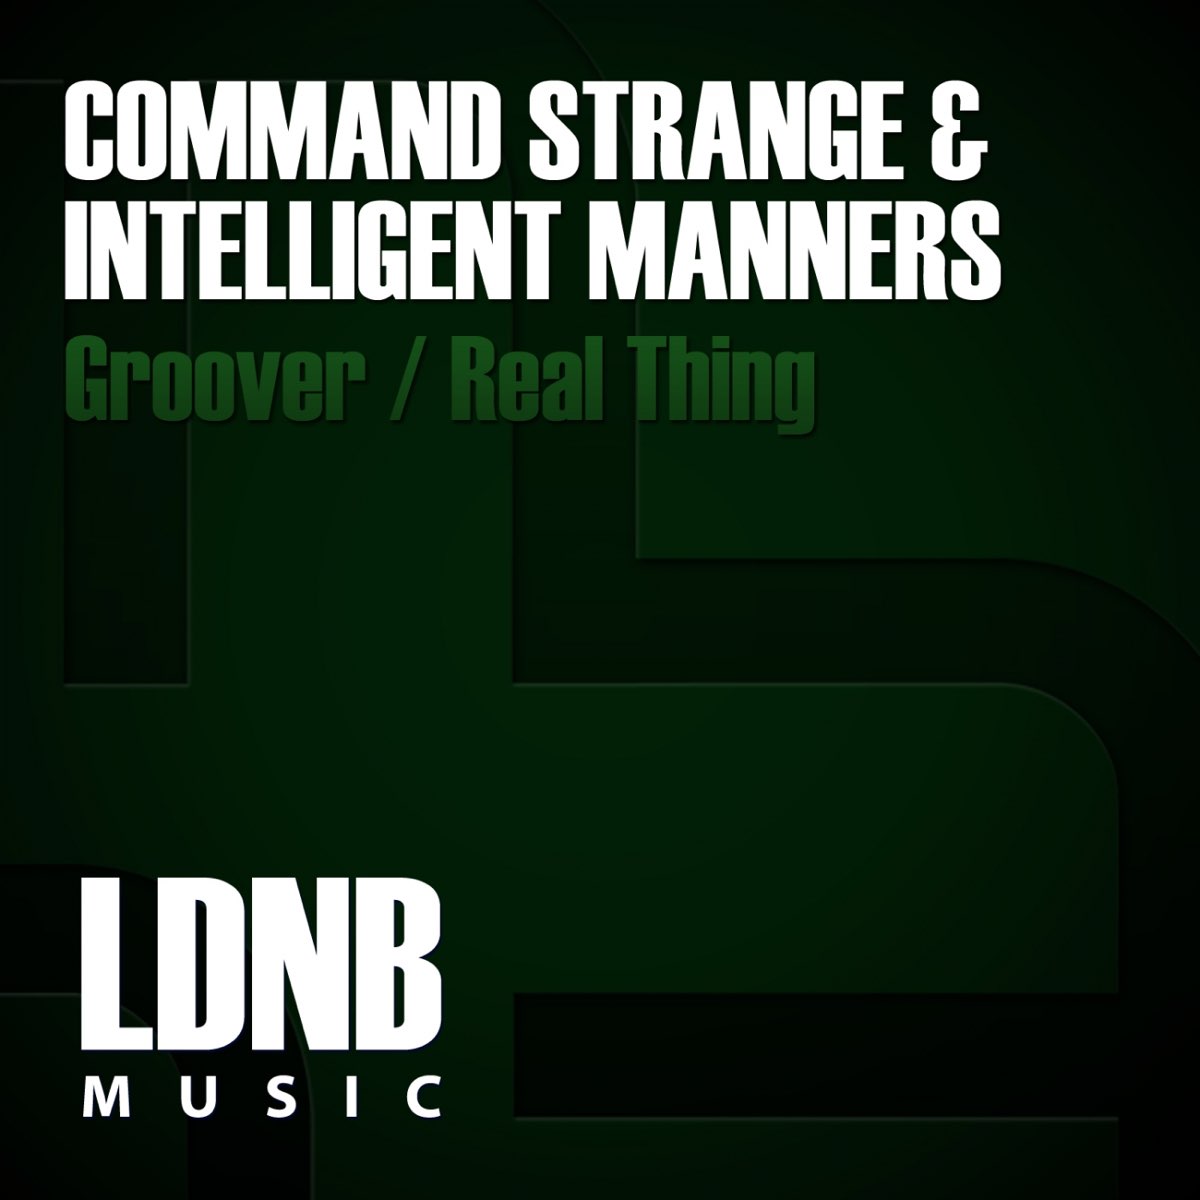 Command Strange. Intelligent manners. LDNB. Command Strange Intelligent manners Joy. Command песня